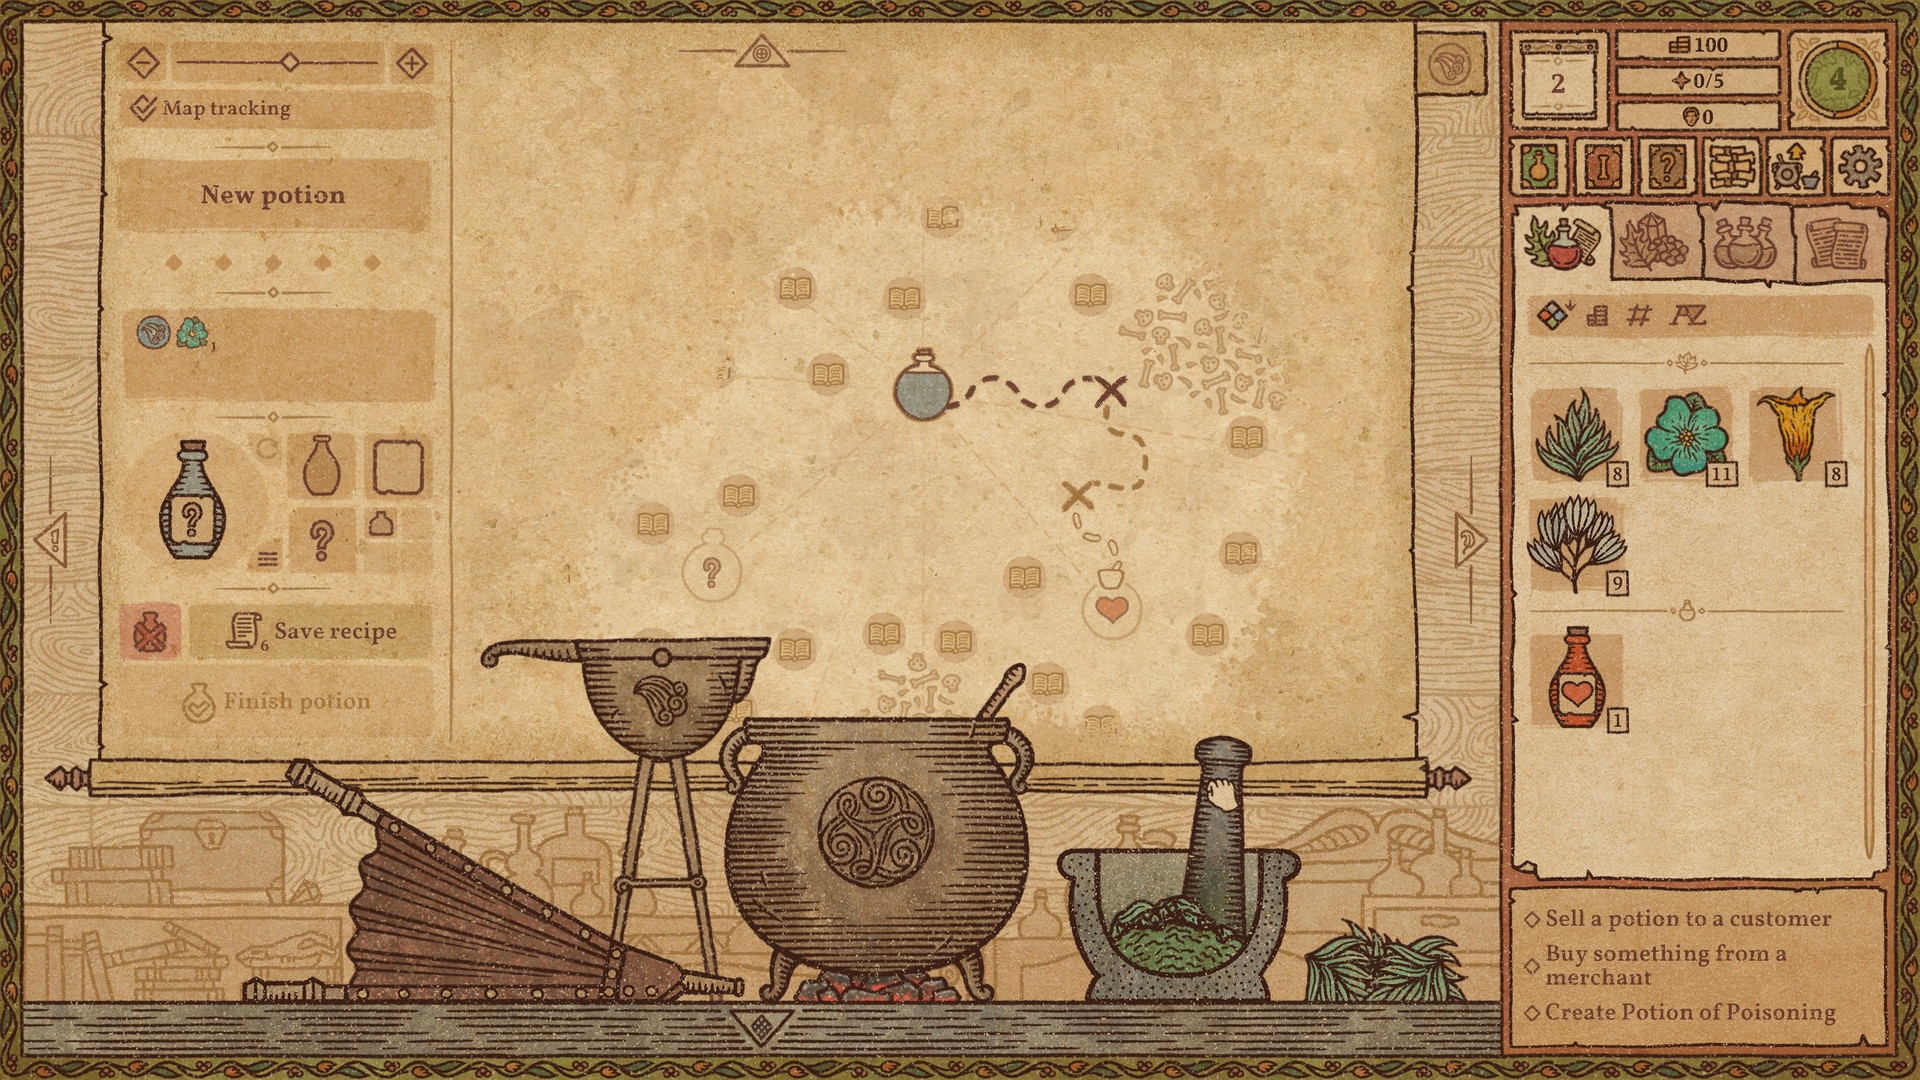 Potion Craft: Alchemist Simulator FR Steam CD Key